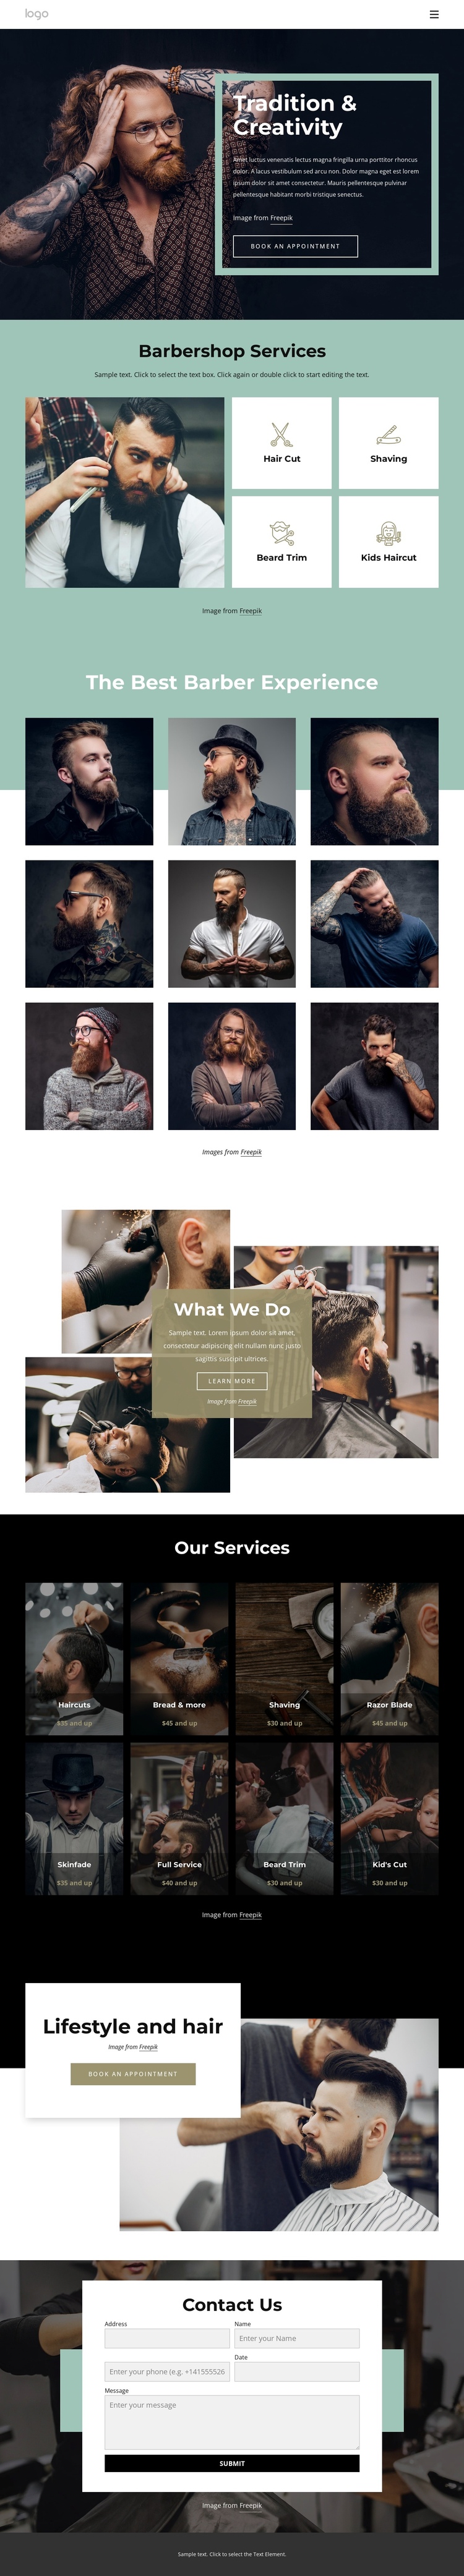 Public barber salon One Page Template